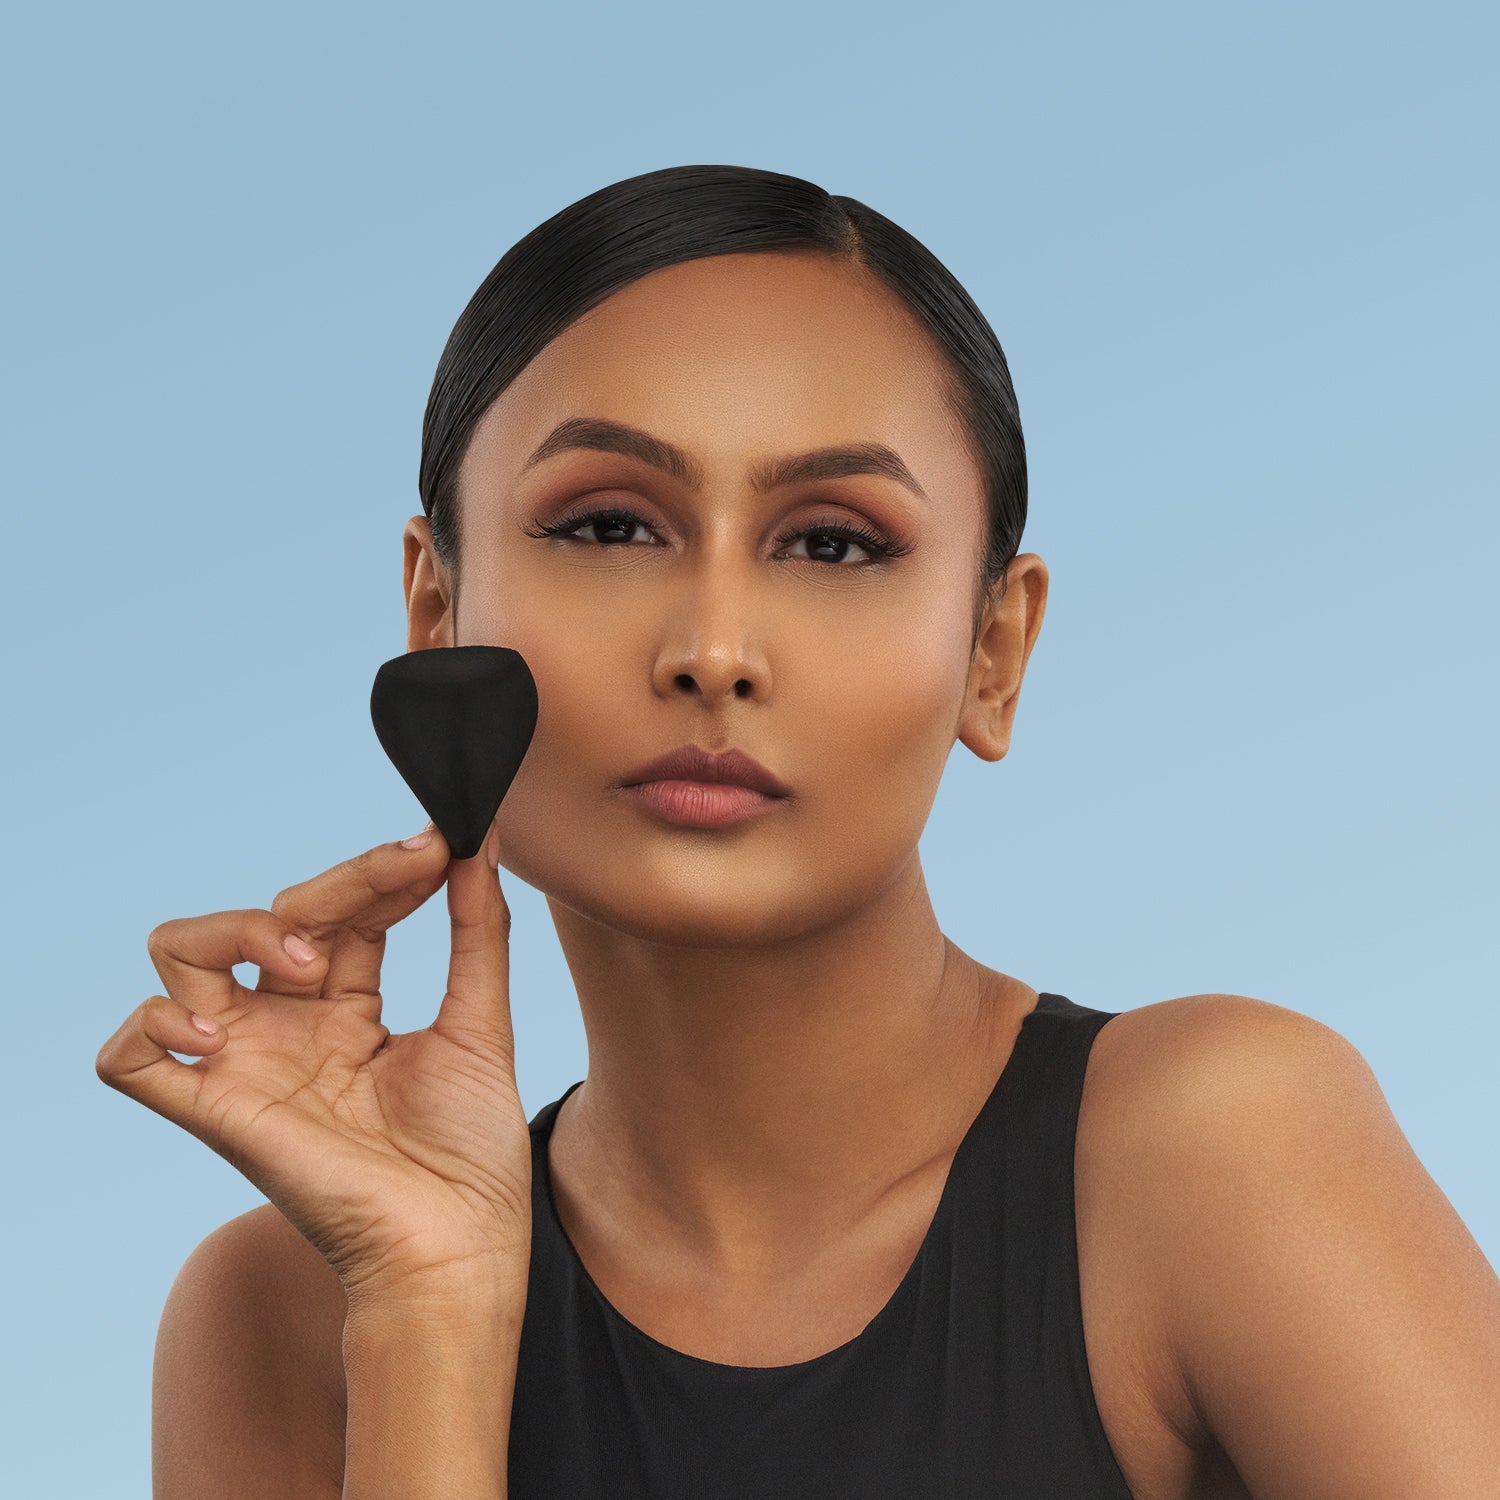 PAC Cosmetics Aeroblend Makeup Blender (1 N) #Size_Full Size